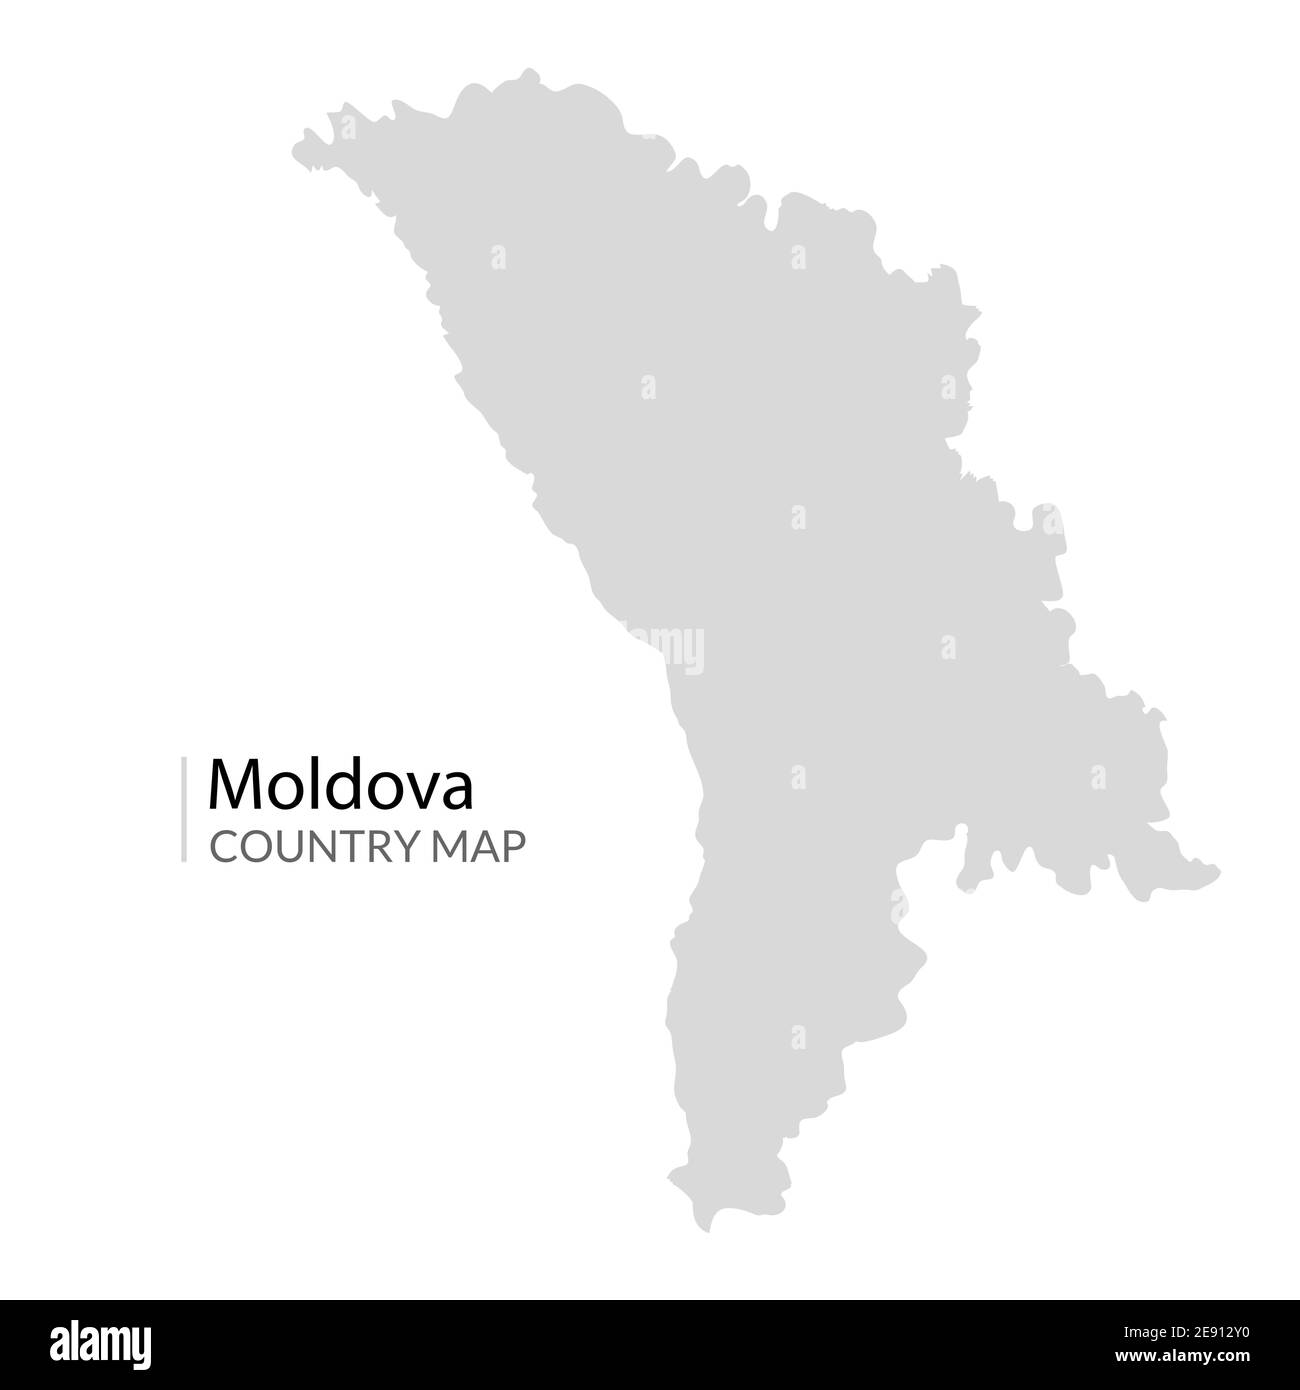 Moldova vector map illustration. Republic Moldova country, moldavia cartography Stock Vector